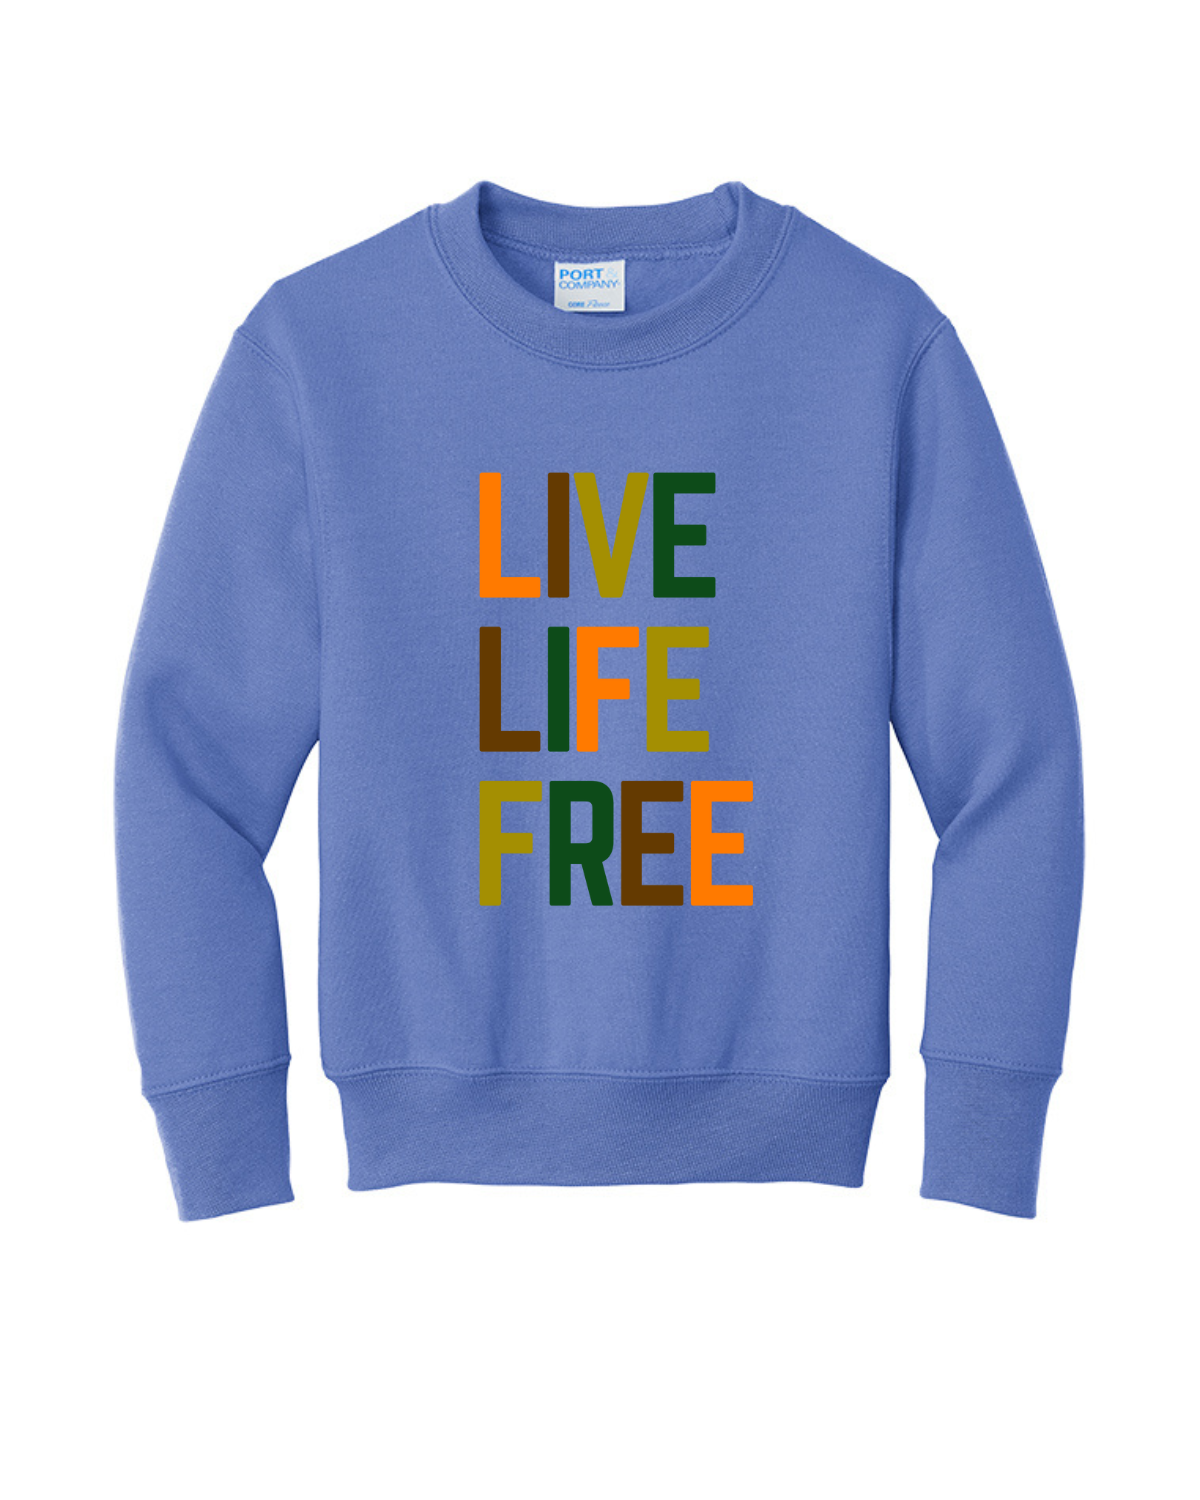 YOUTH - Live Life Free Sweatshirt